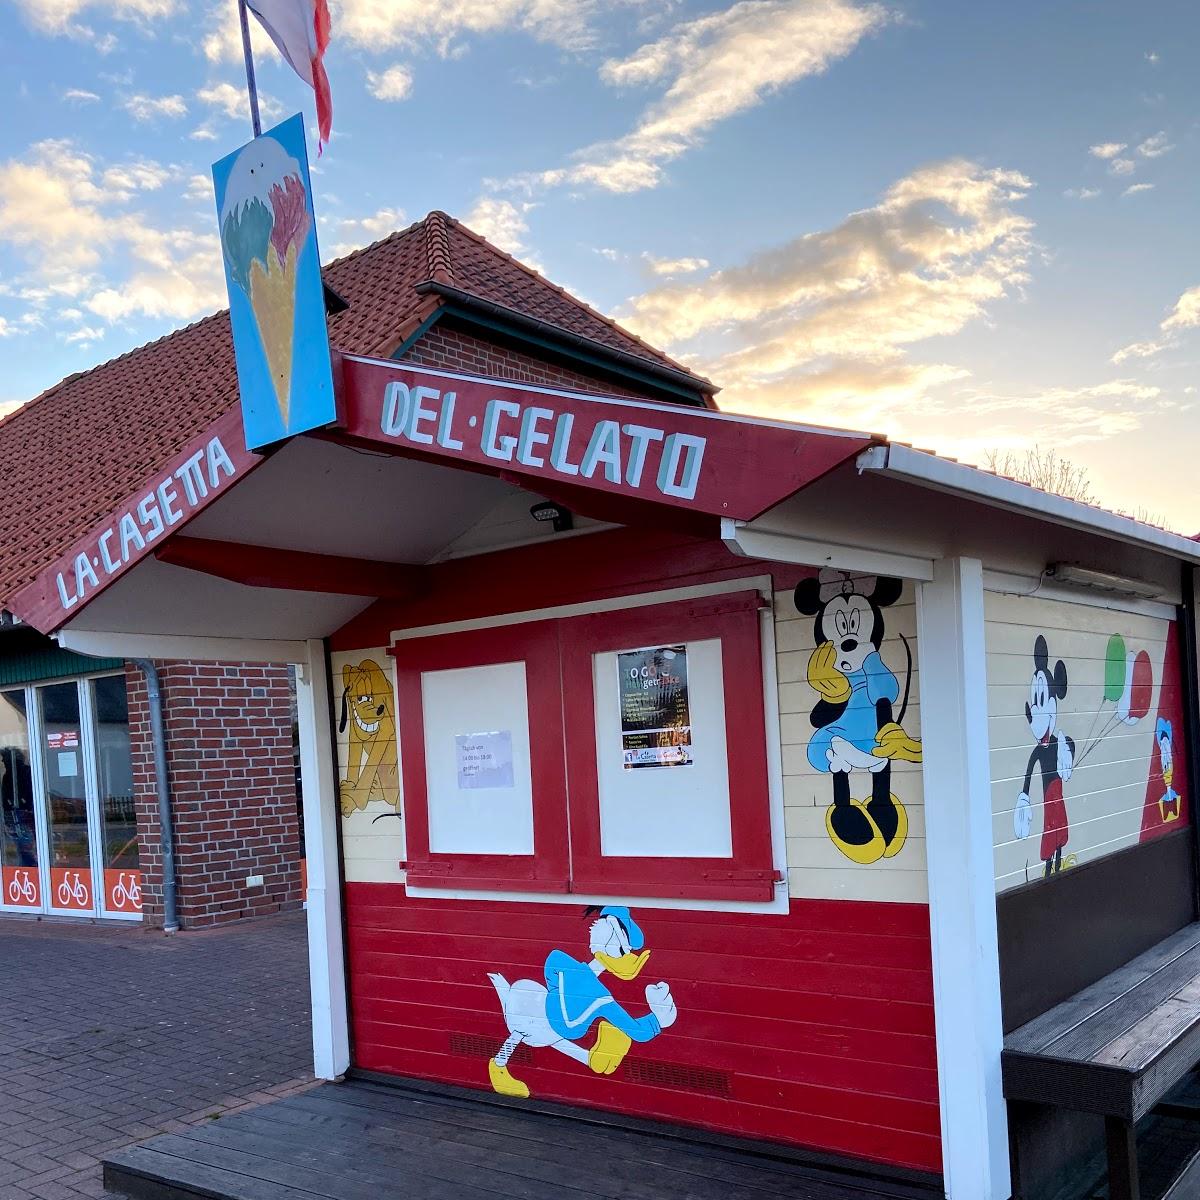 Restaurant "La casetta del gelato" in  Butjadingen